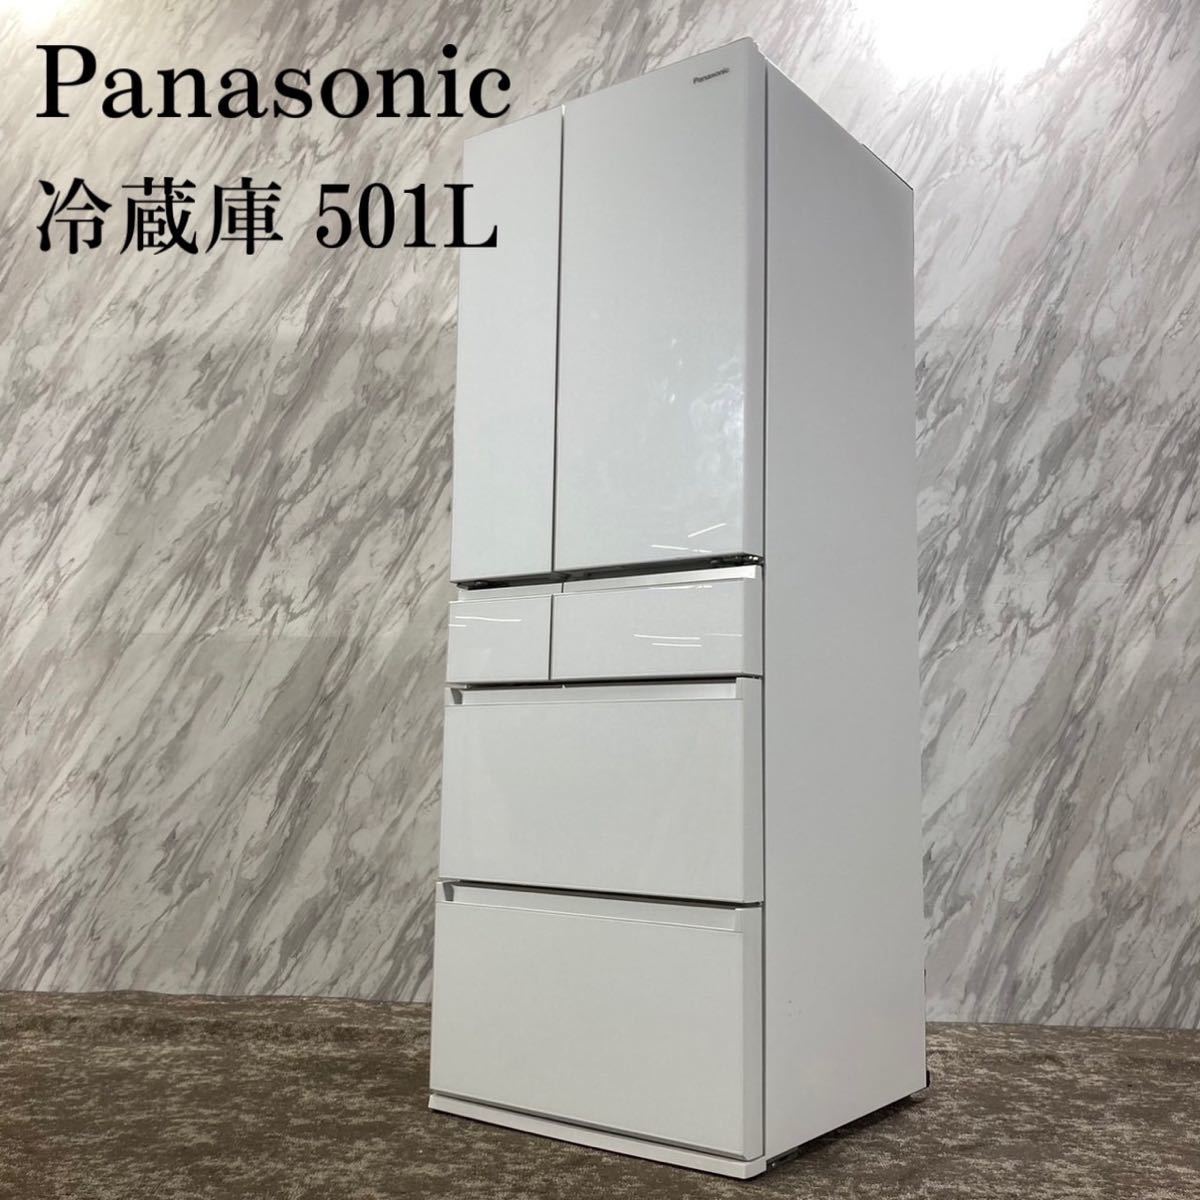 Panasonic 冷蔵庫 NR-F507PX-W 501L 家電 E558-